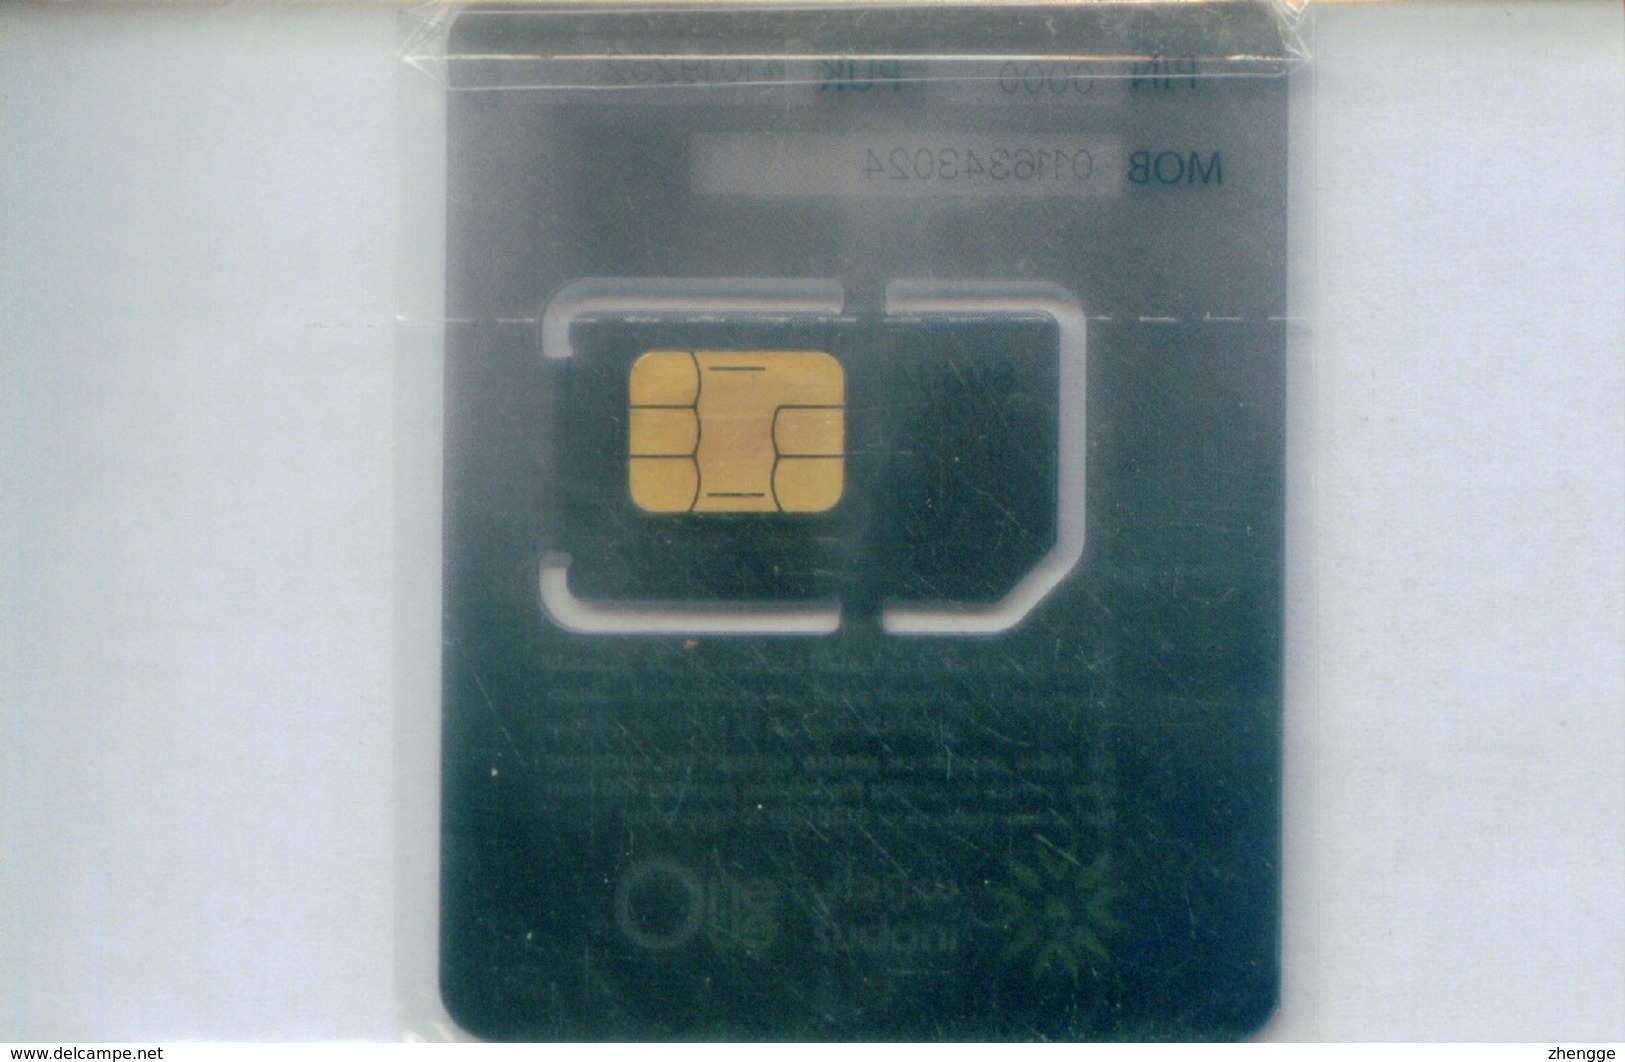 Sudan GSM SIM Cards, Transparent Card (1pcs,MINT) - Sudan